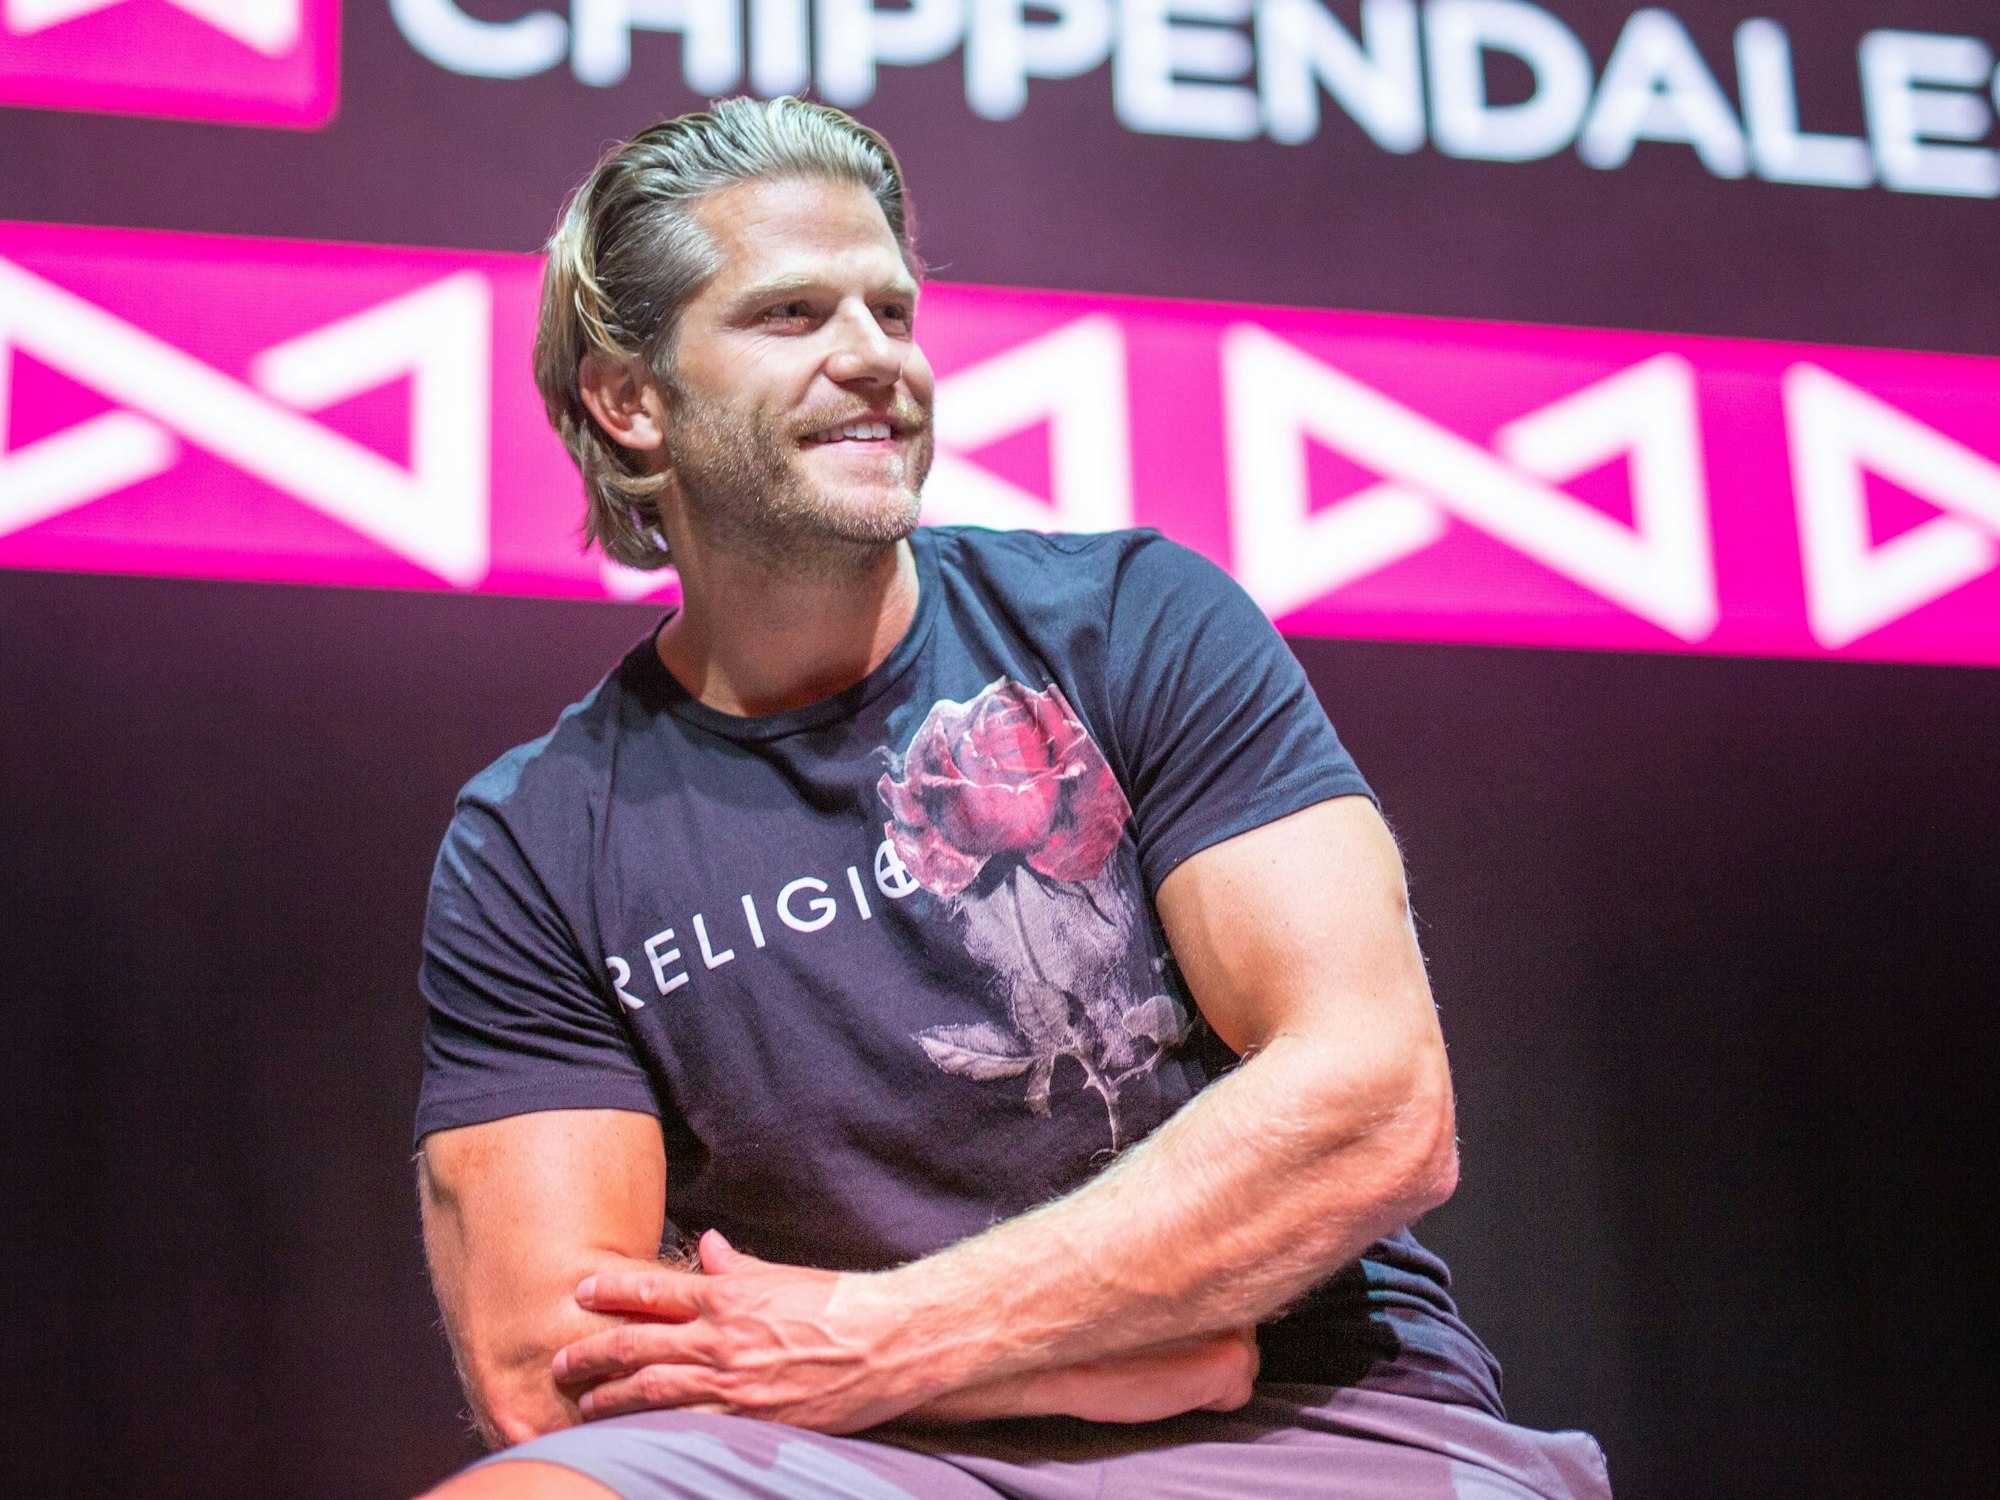 Paul Janke, Ex-„Bachelor“, sitzt vor dem Logo der Tanzgruppe Chippendales.